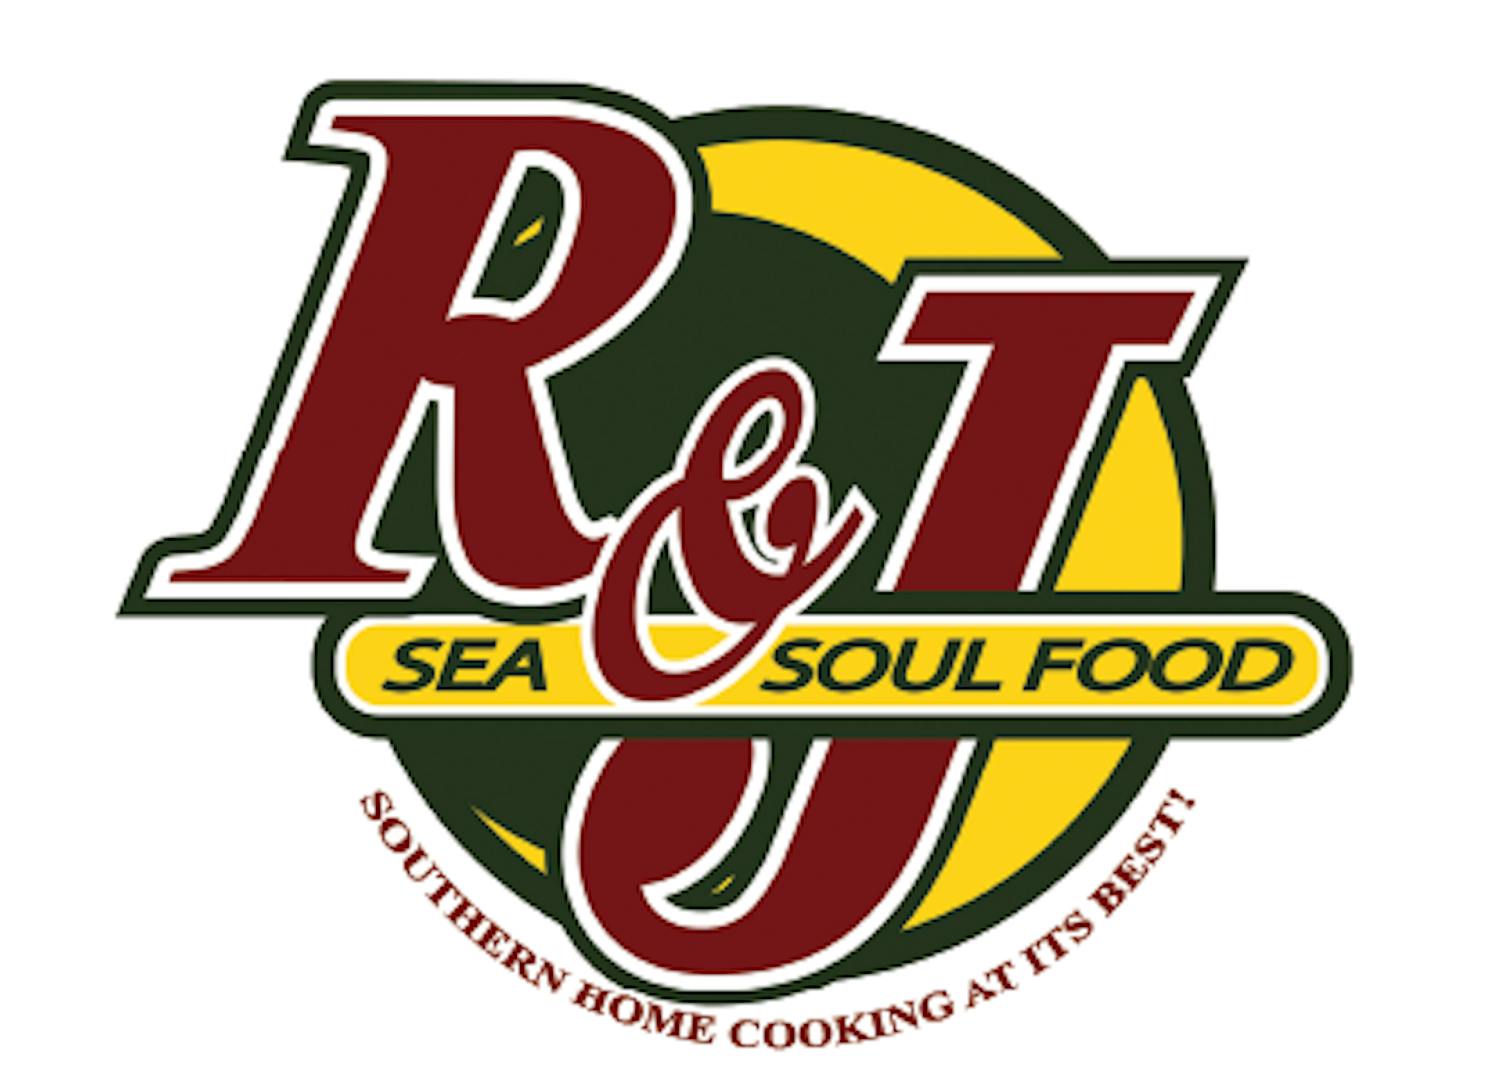 R&J Sea & Soul